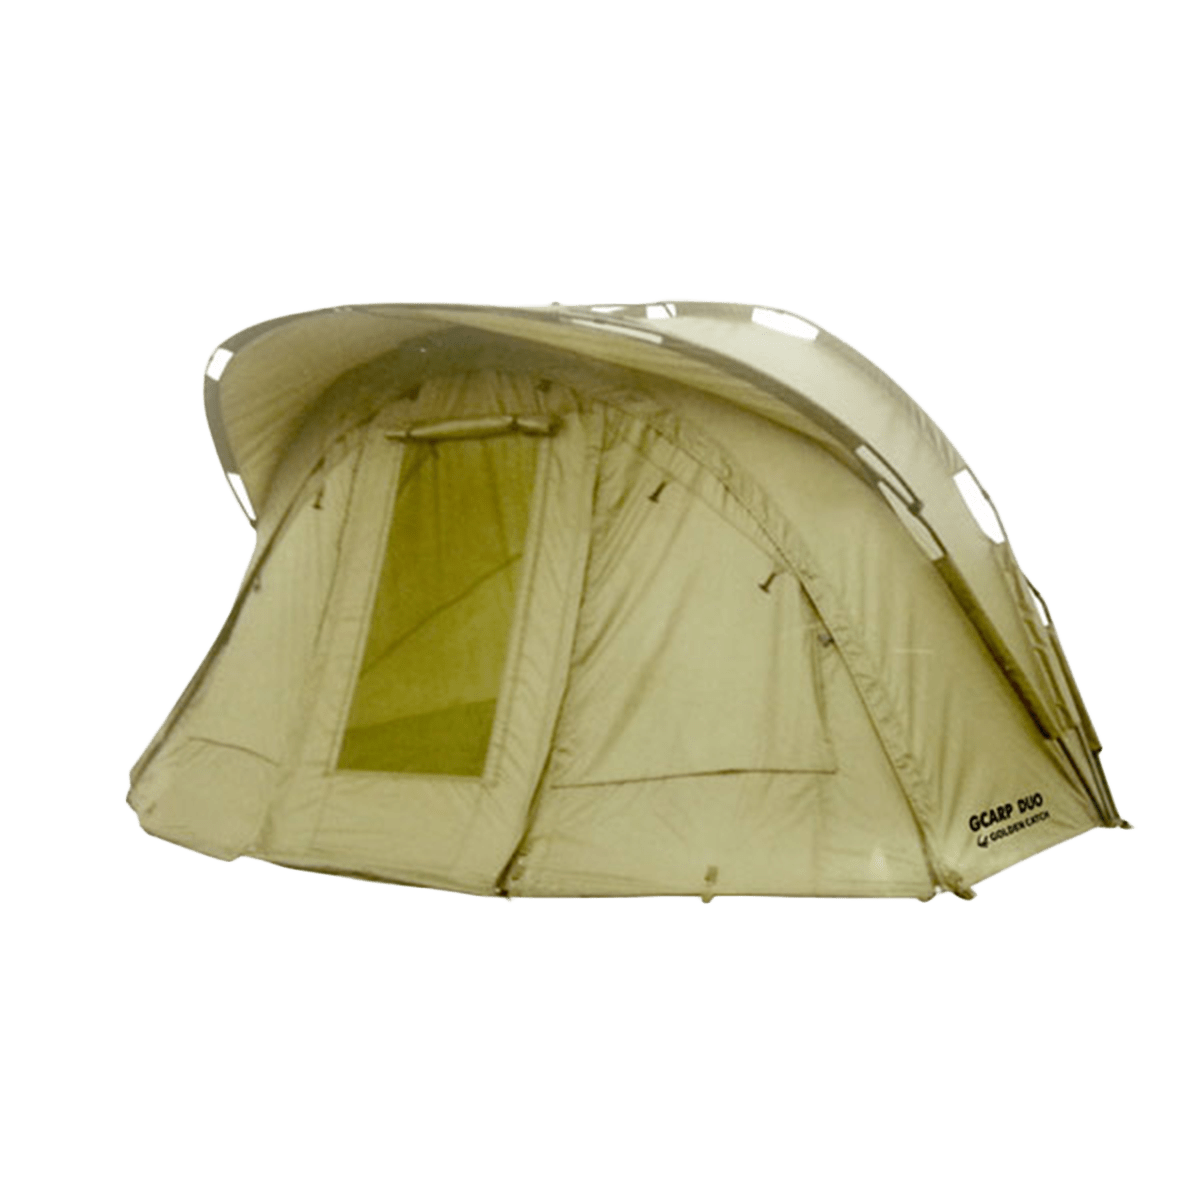 Golden Catch Tent GCarp Duo 2-Persons